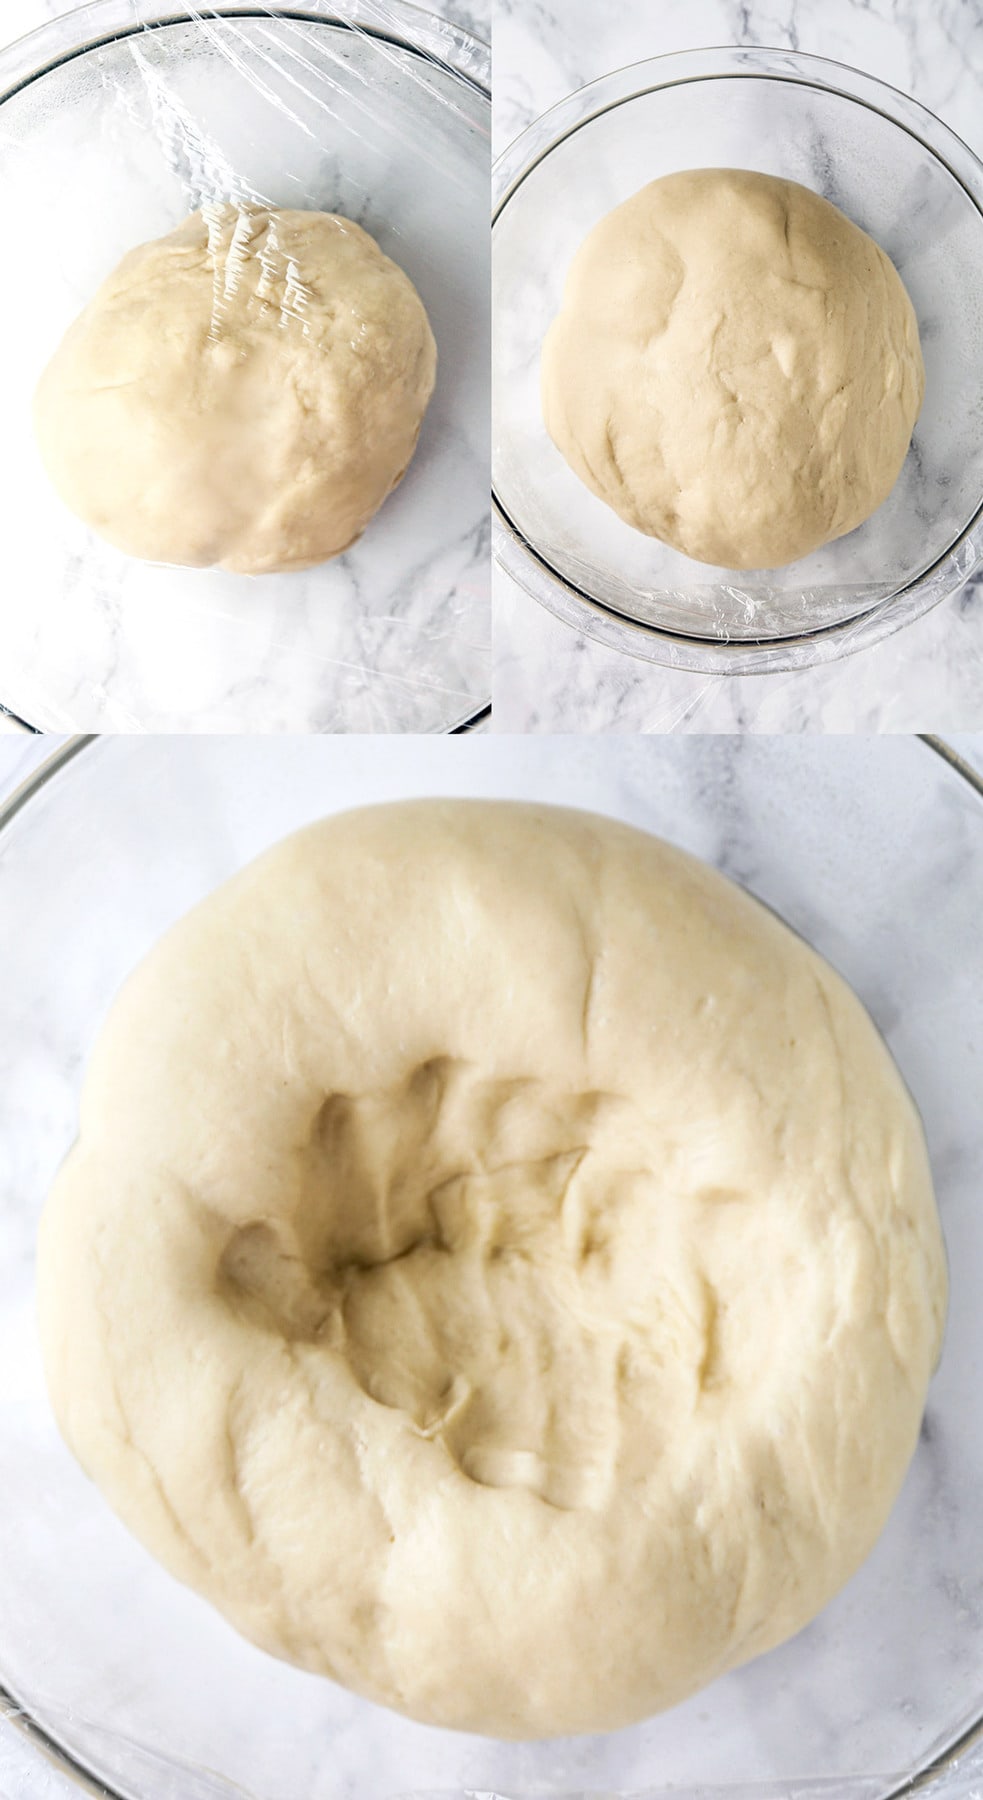 dough rising for Japanese milk bread (shokupan)